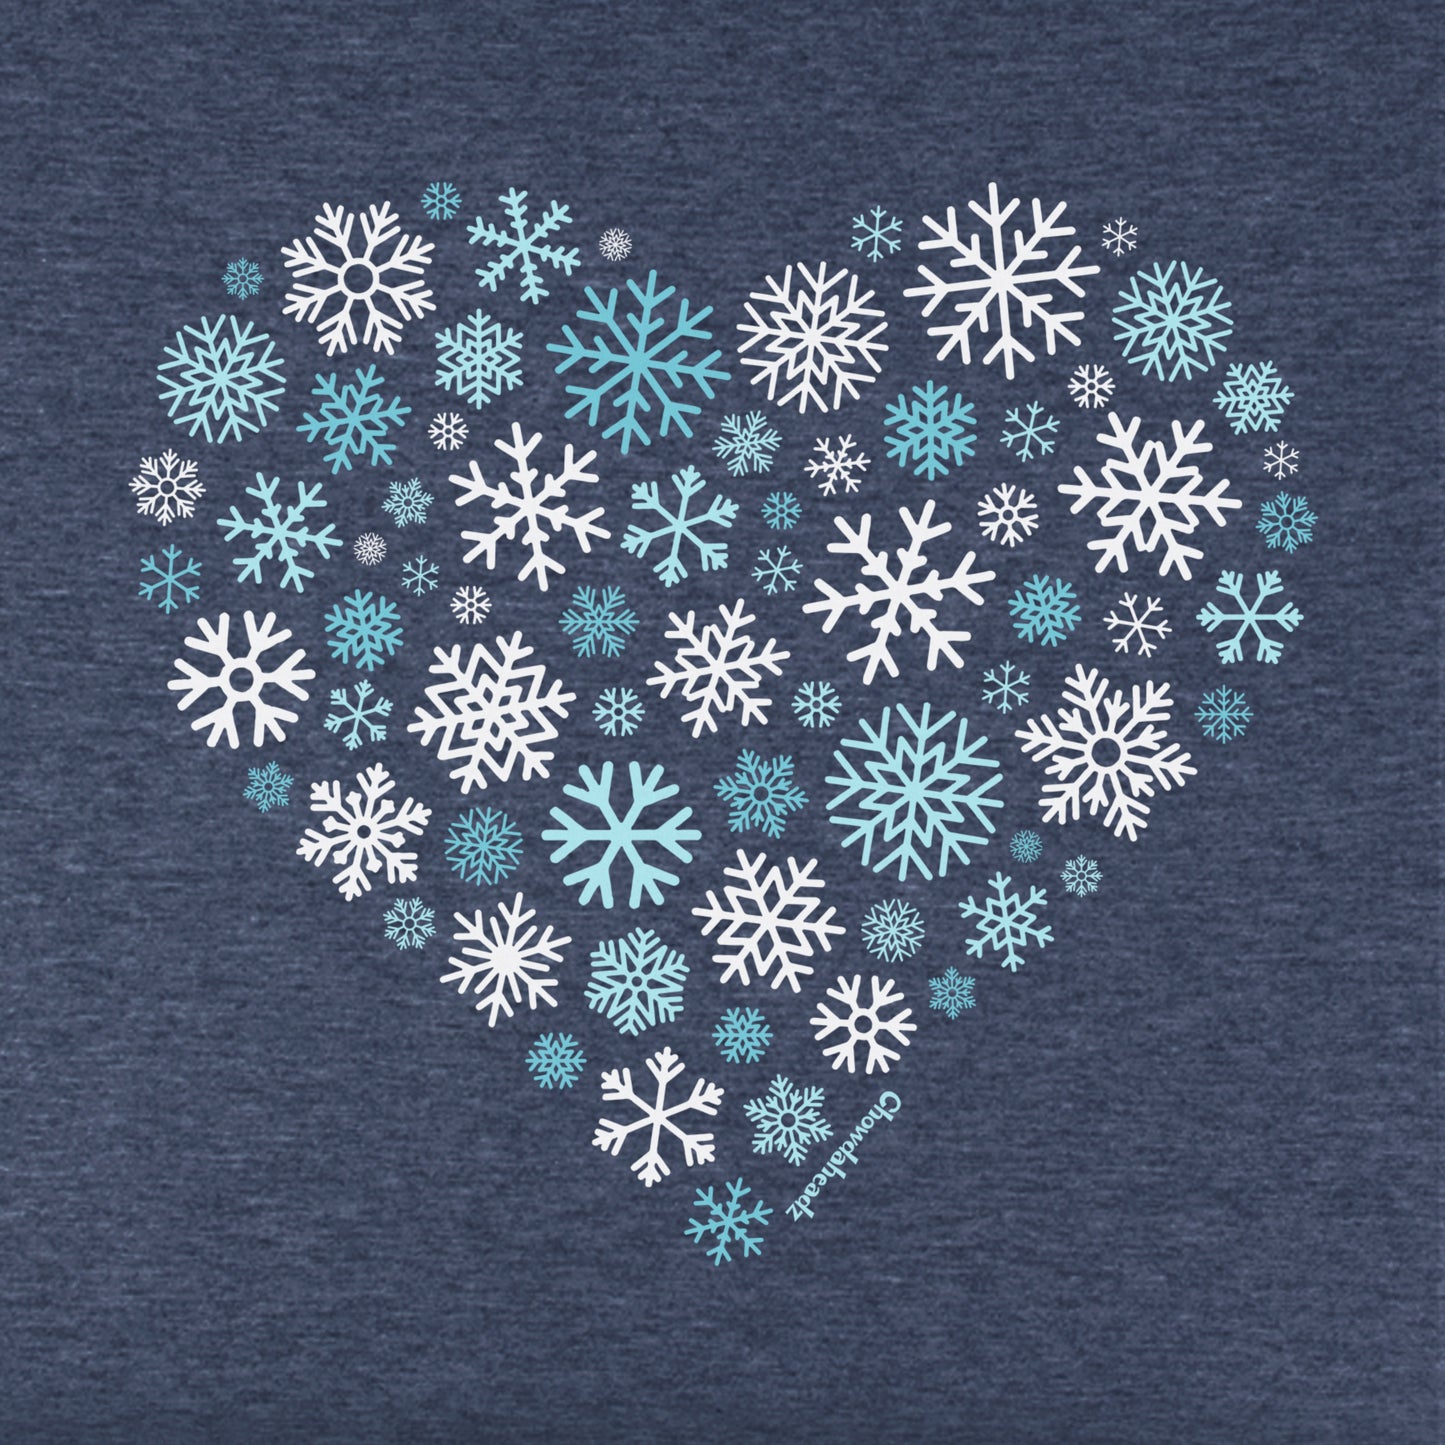 Snowflake Heart Youth T-Shirt - Chowdaheadz